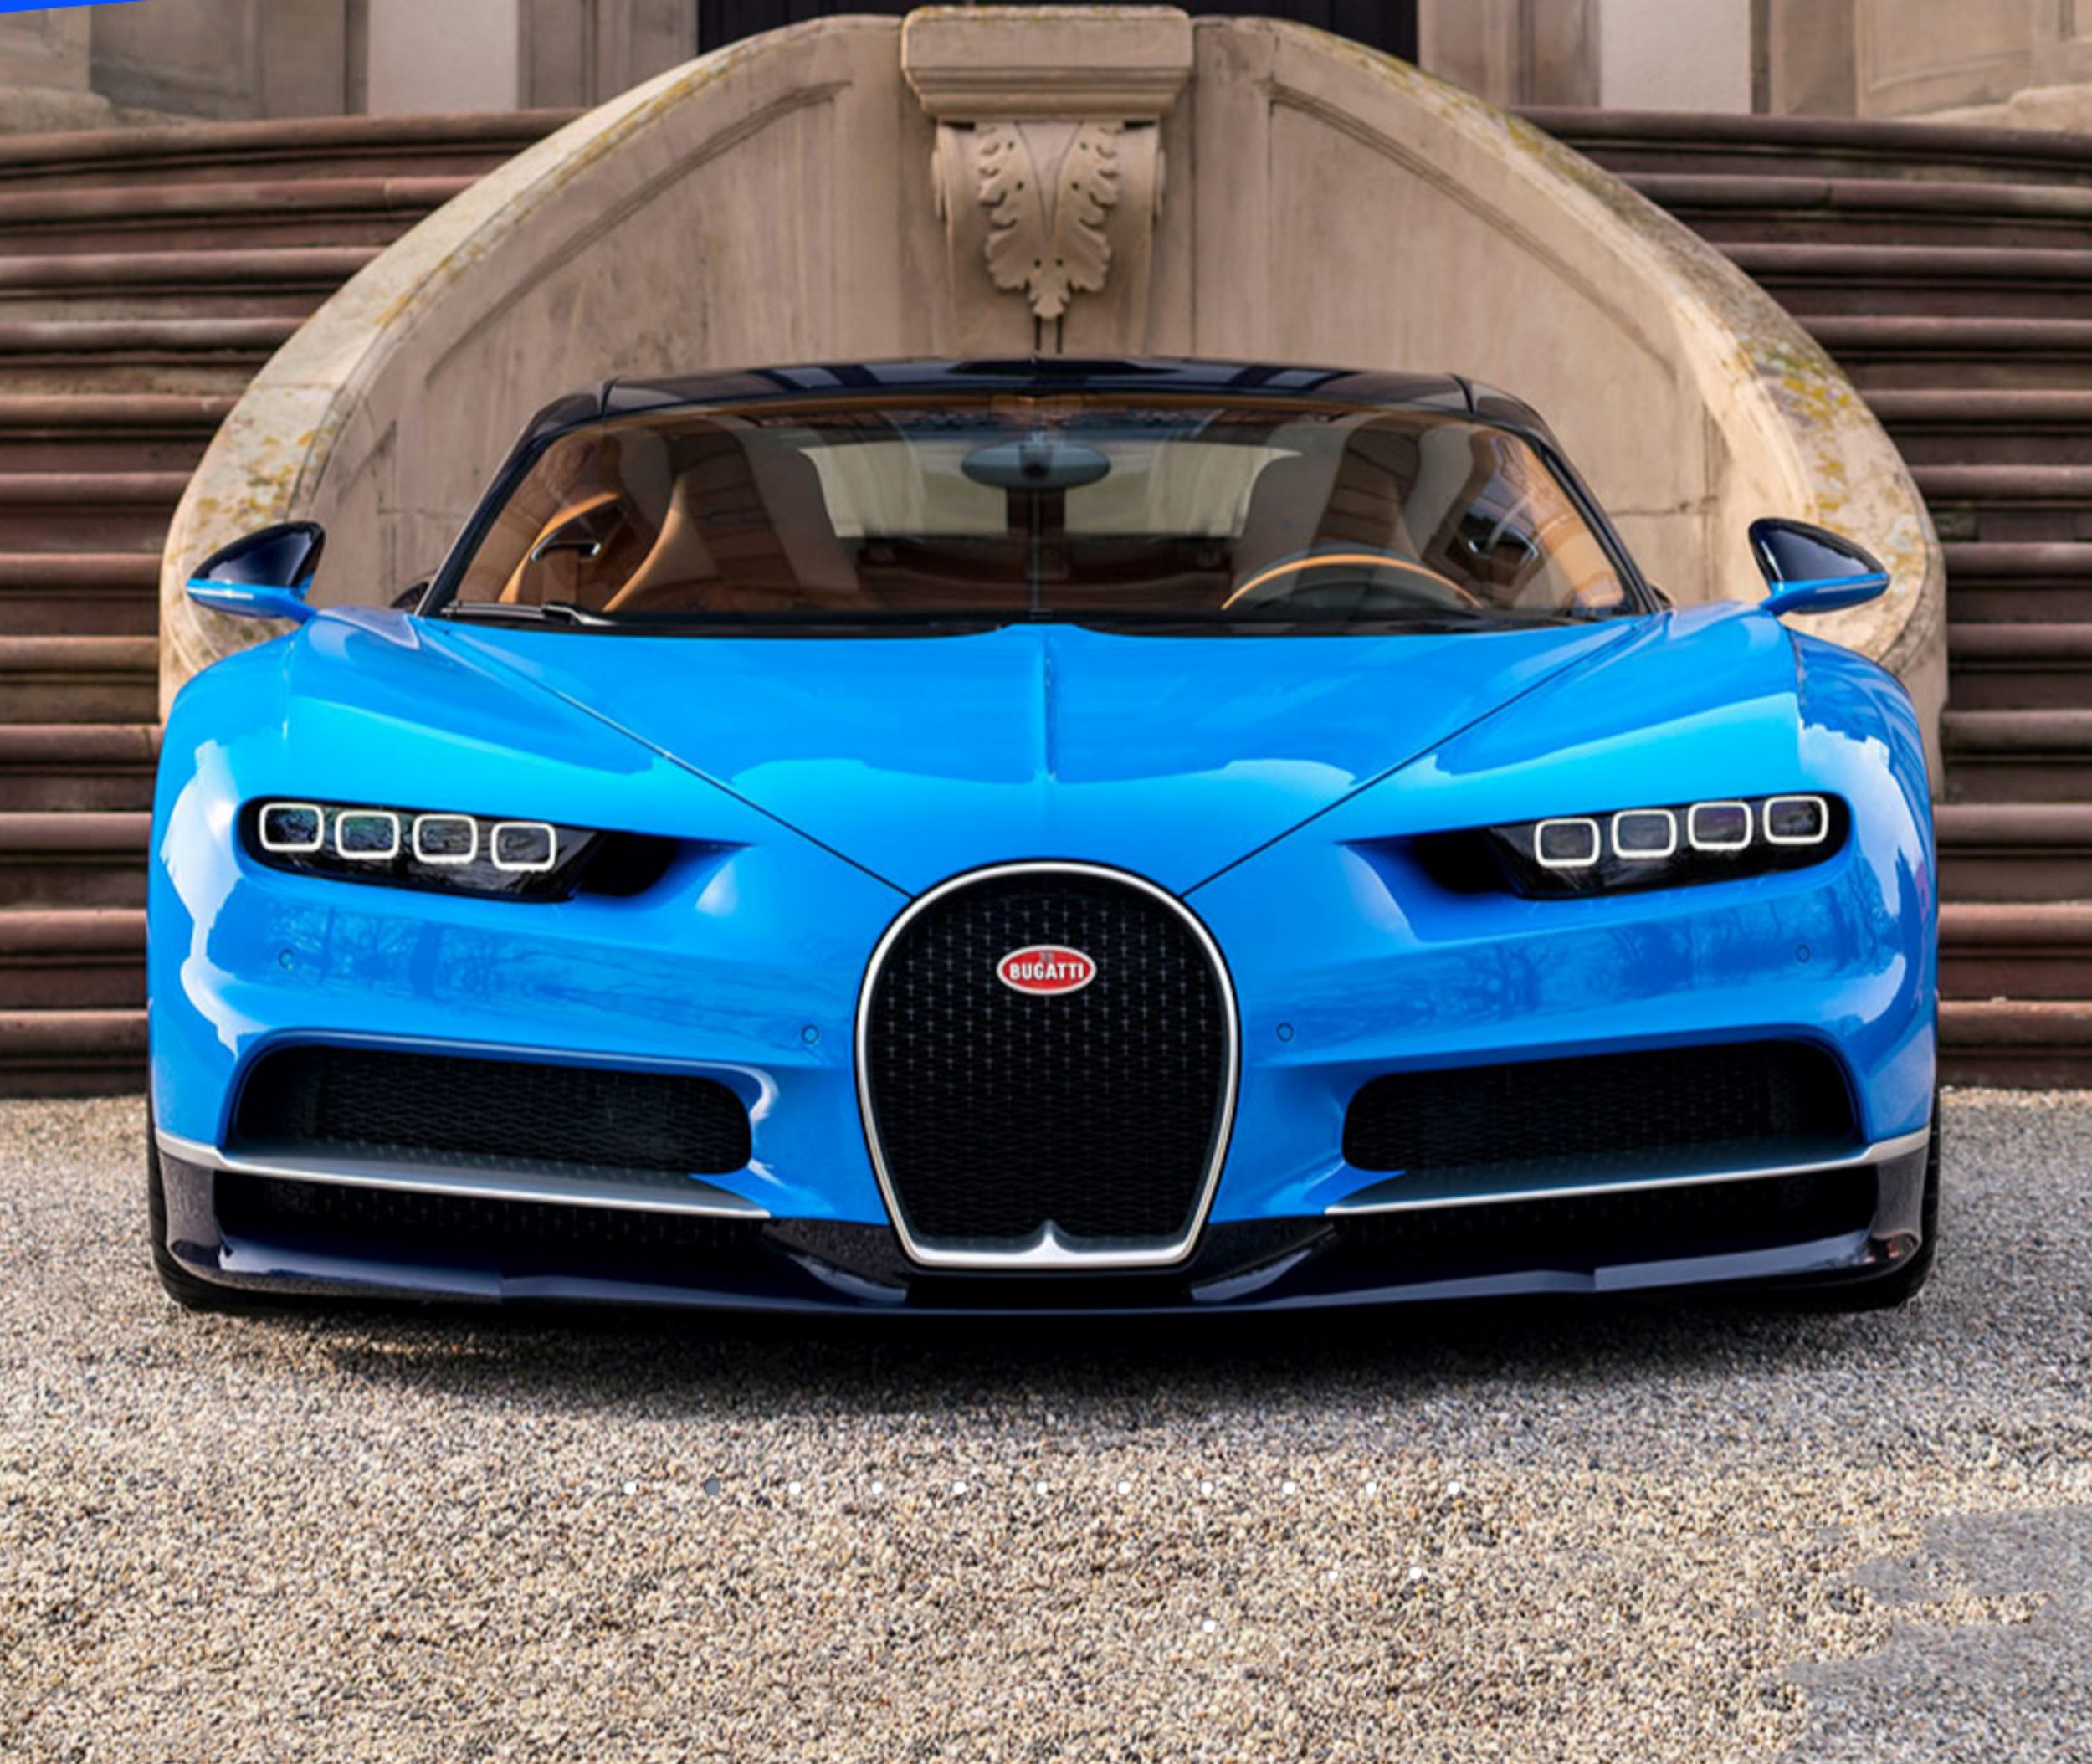 Siêu phẩm Bugatti Chiron.